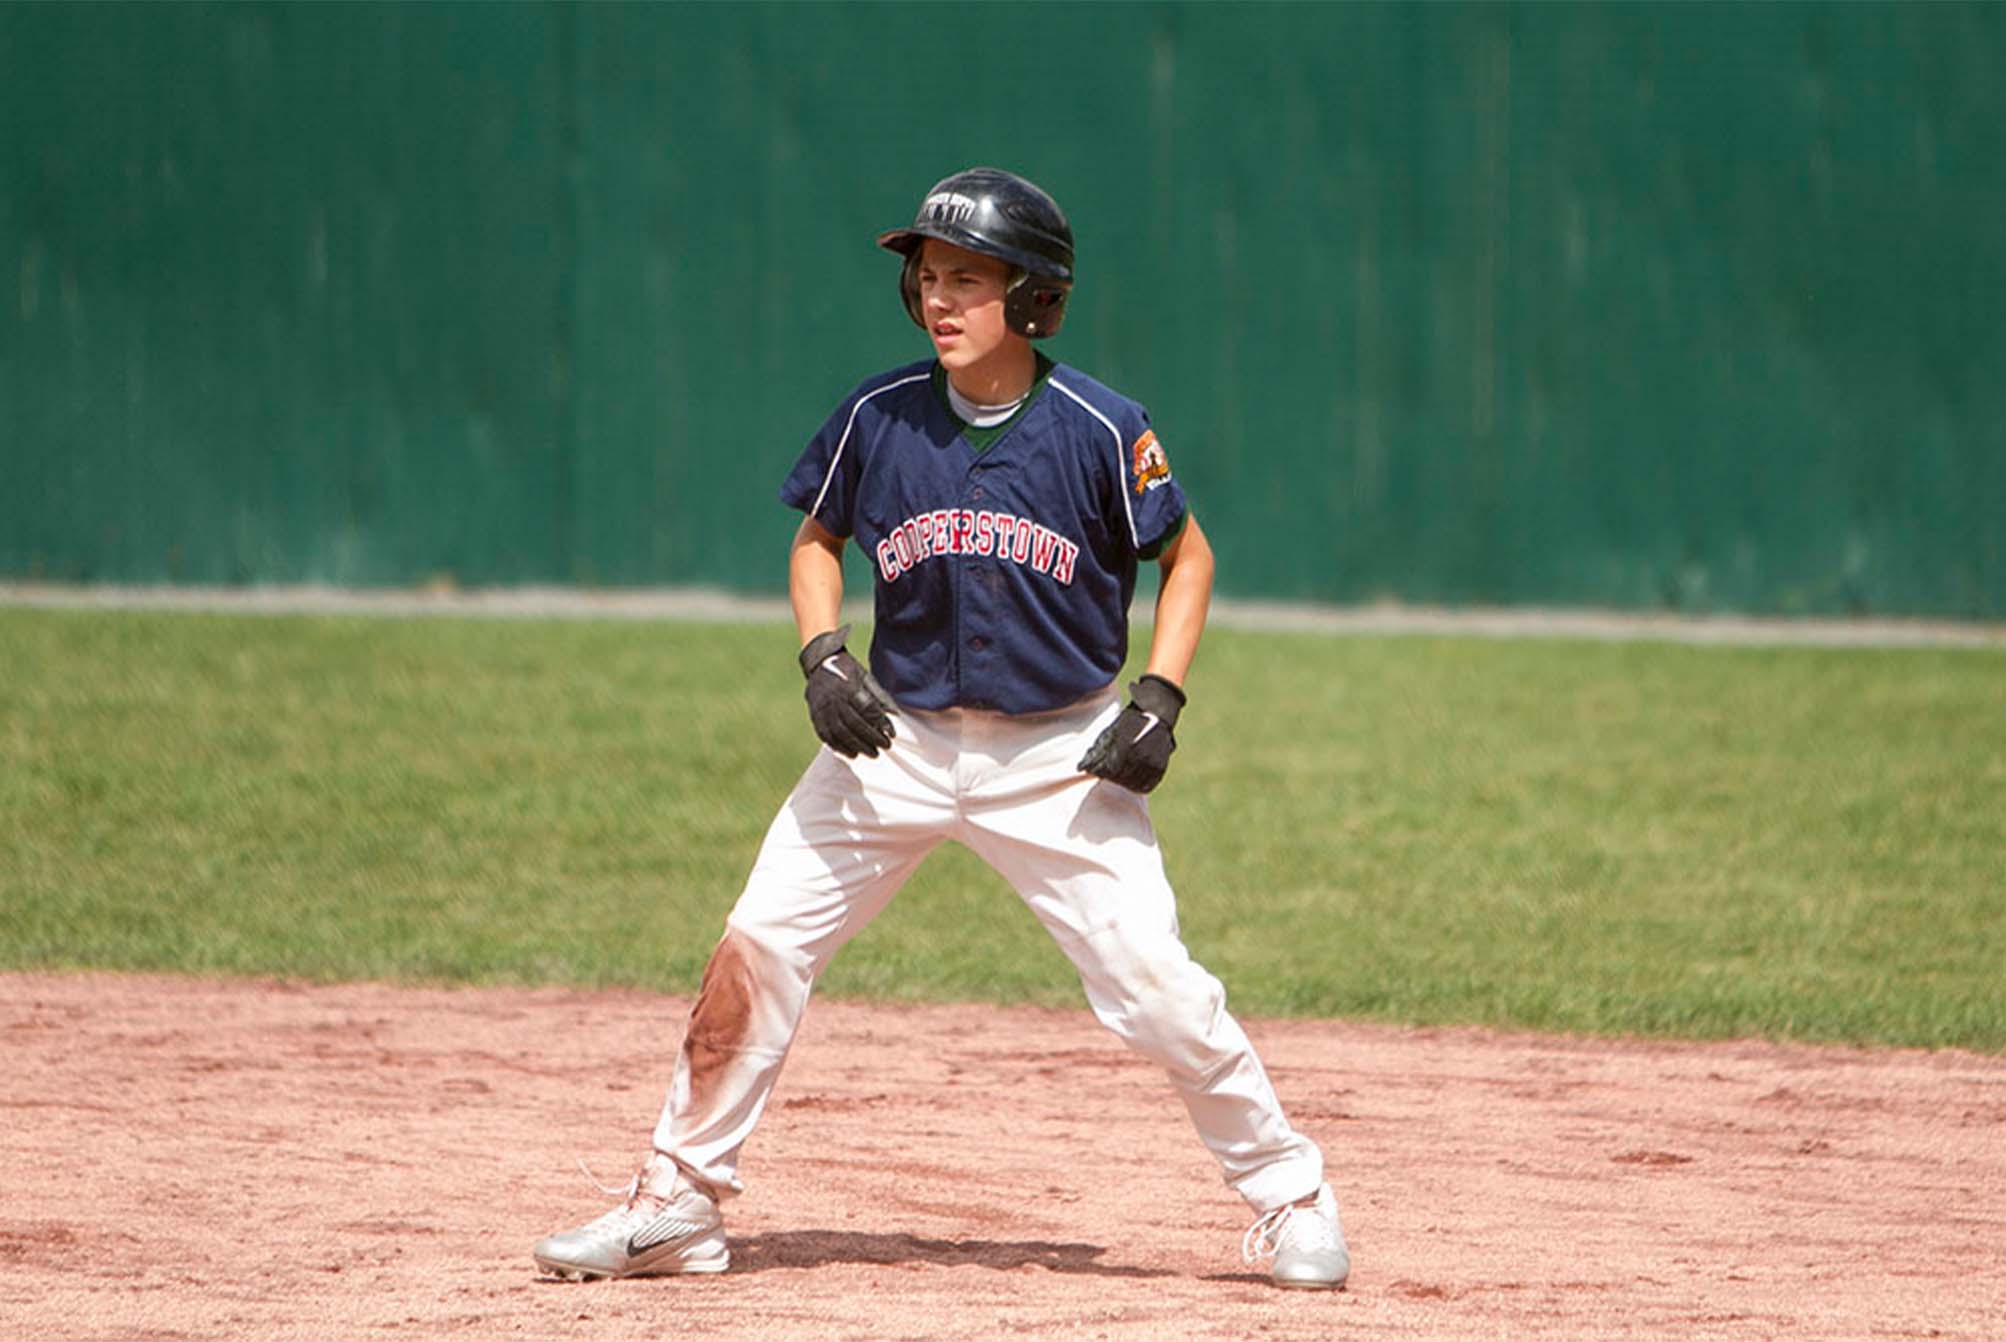 Cooperstown baseball team player